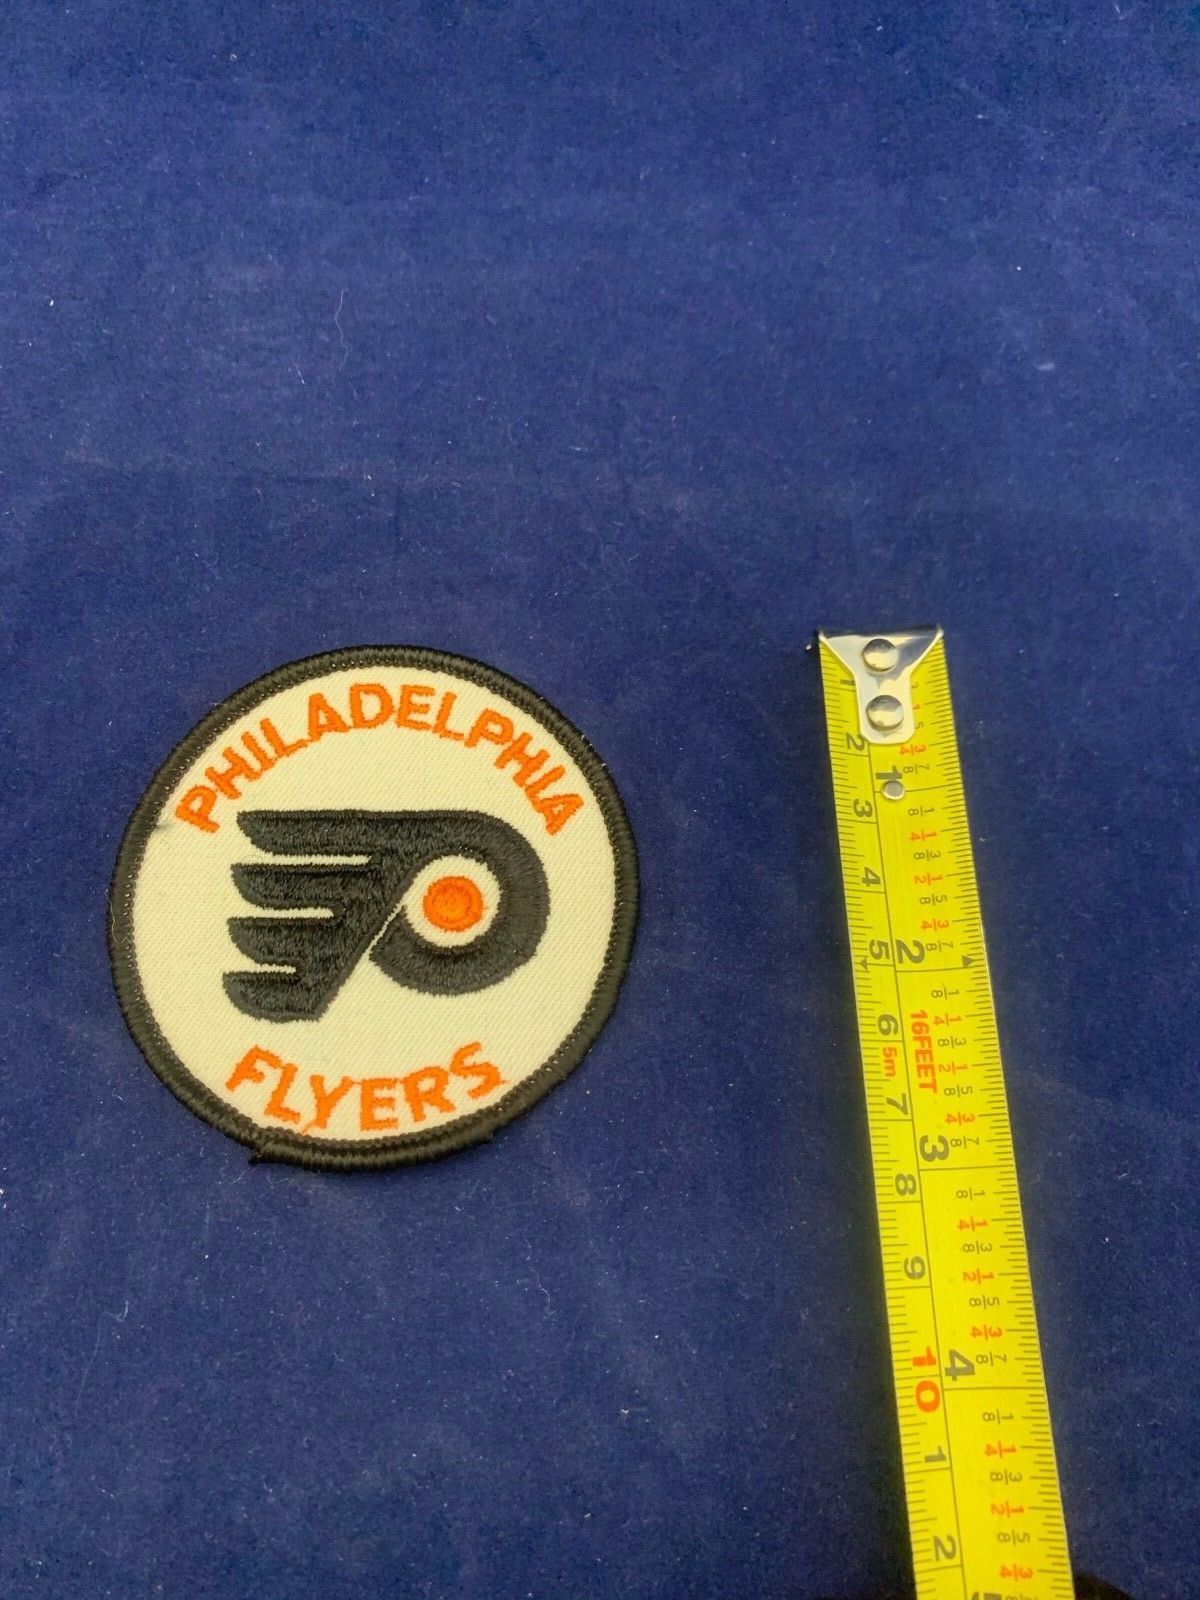 Philadelphia Flyers Vintage  NHL Hockey Patch Size 3 x 3 inches  Round Black